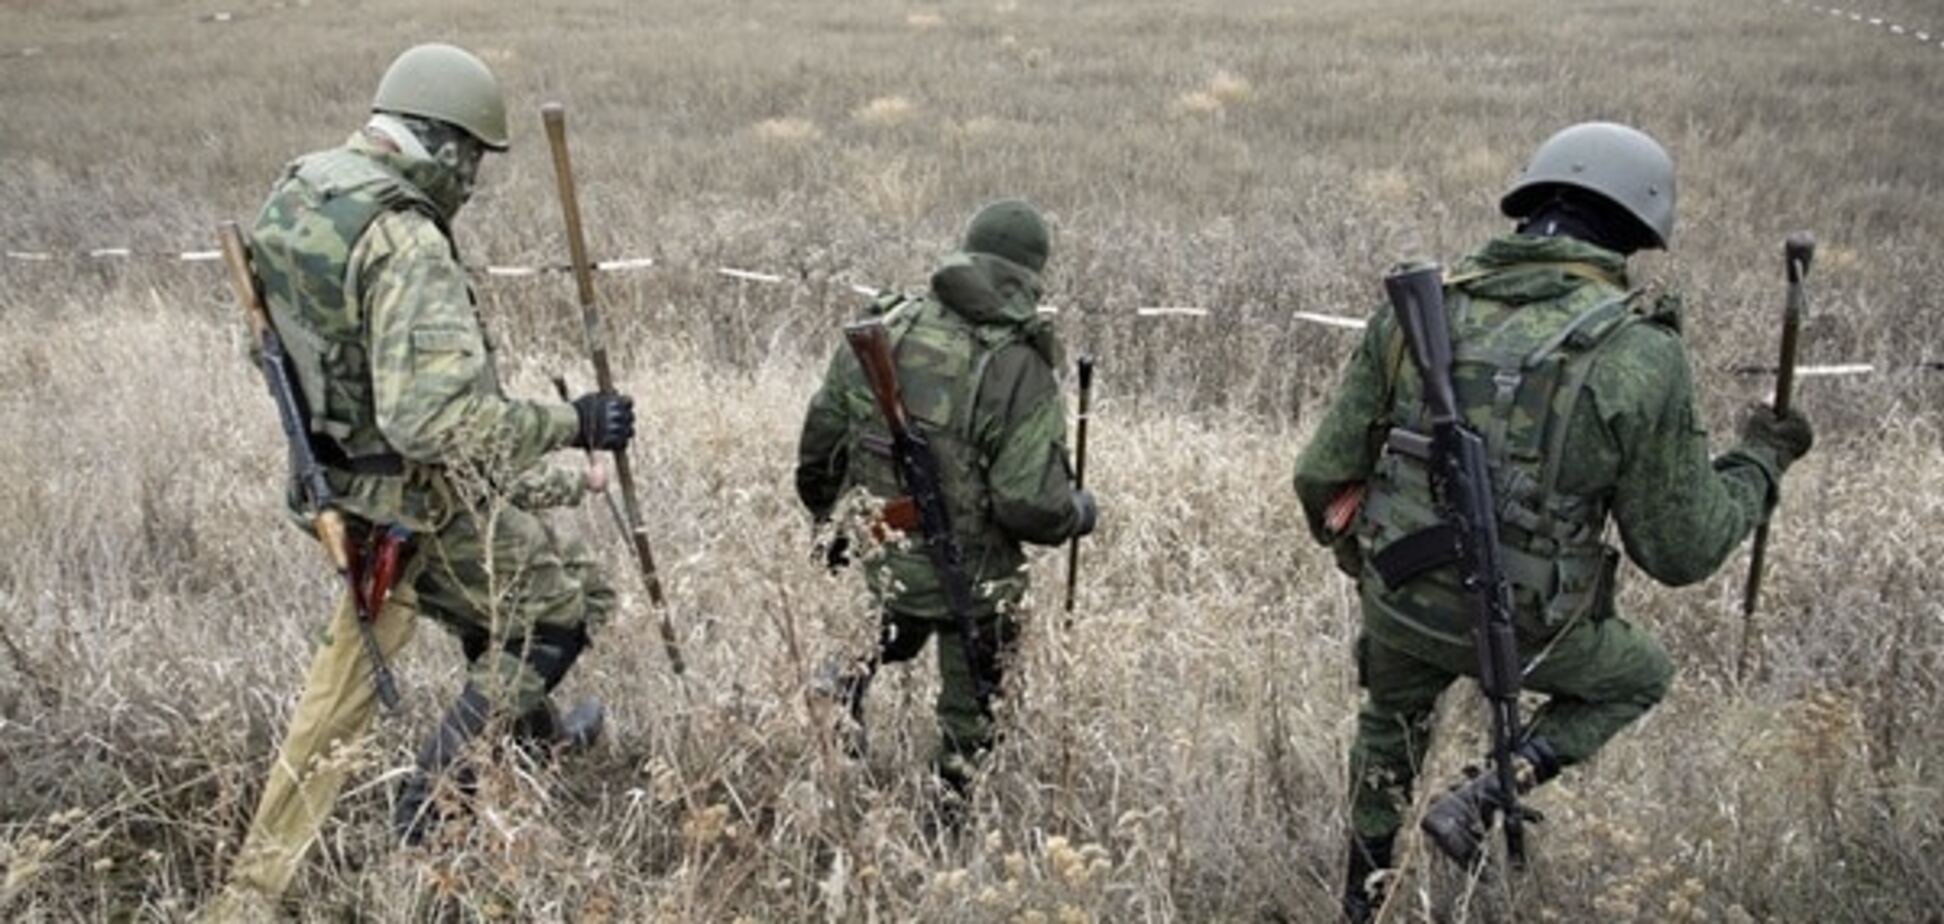 Росія руйнує елементи стабілізації на Донбасі - МЗС